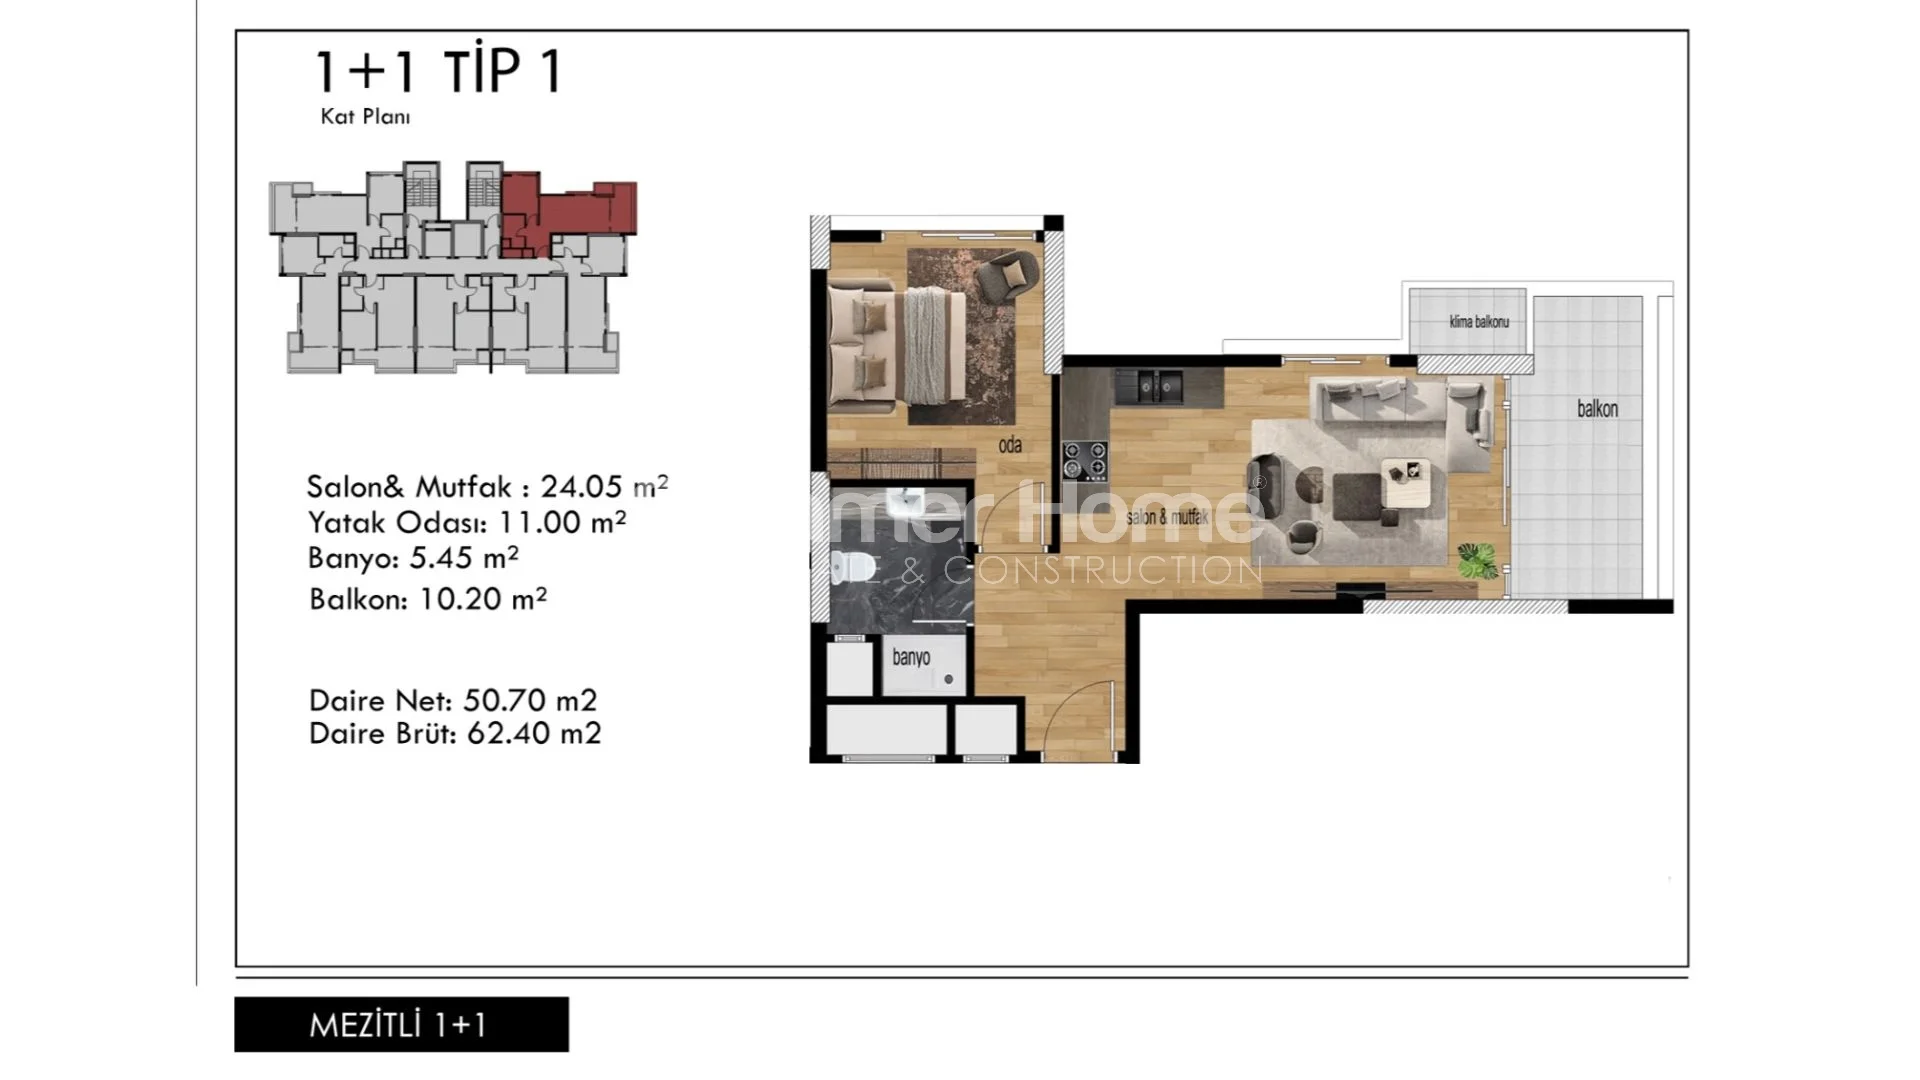 Neue wunderschöne moderne Apartments in Mezitli, Mersin Plan - 22